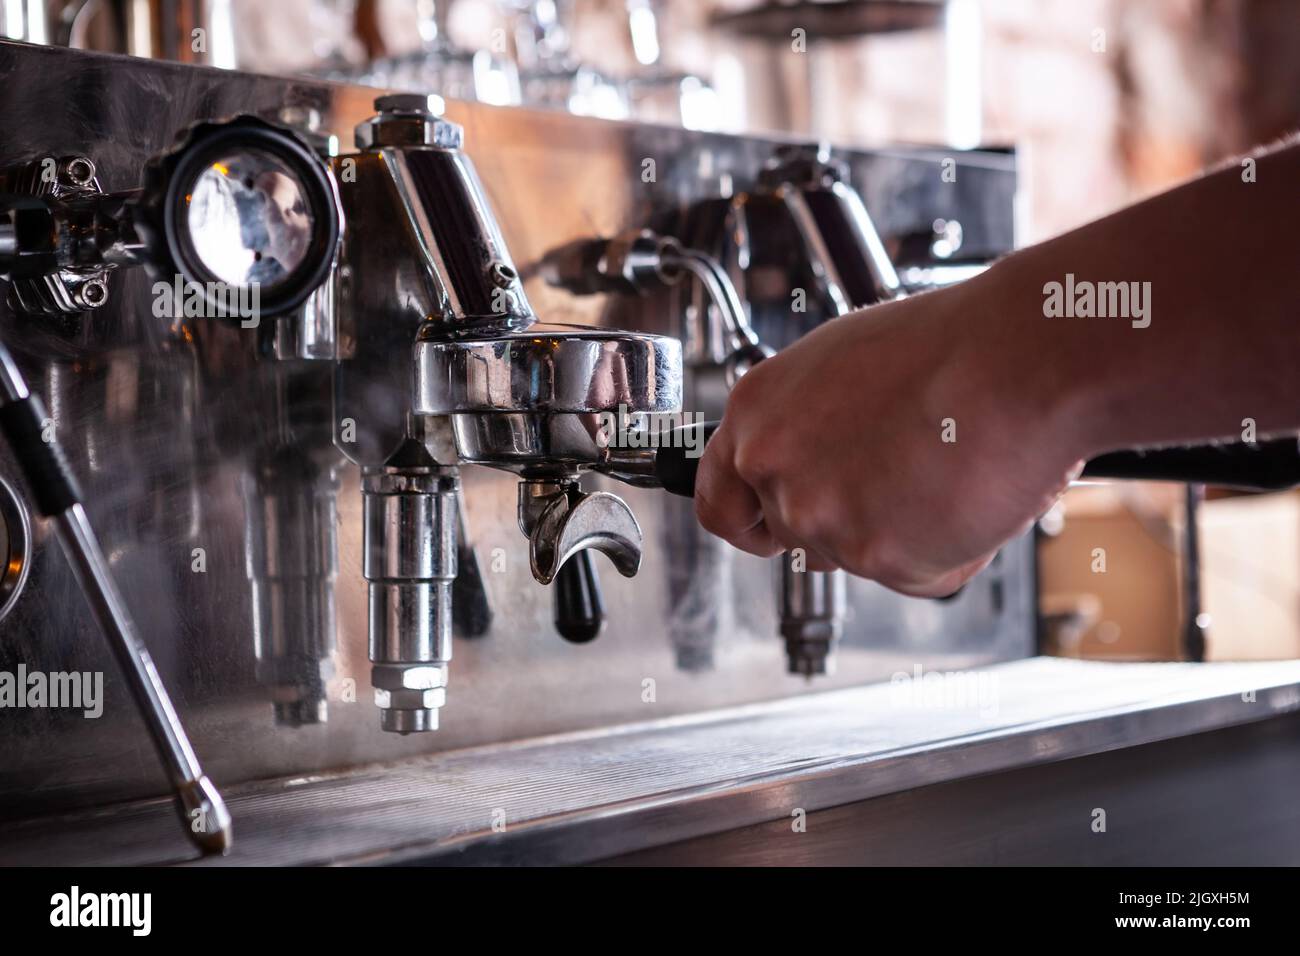 Close up of barista warming up espresso coffee machine. Stock Photo